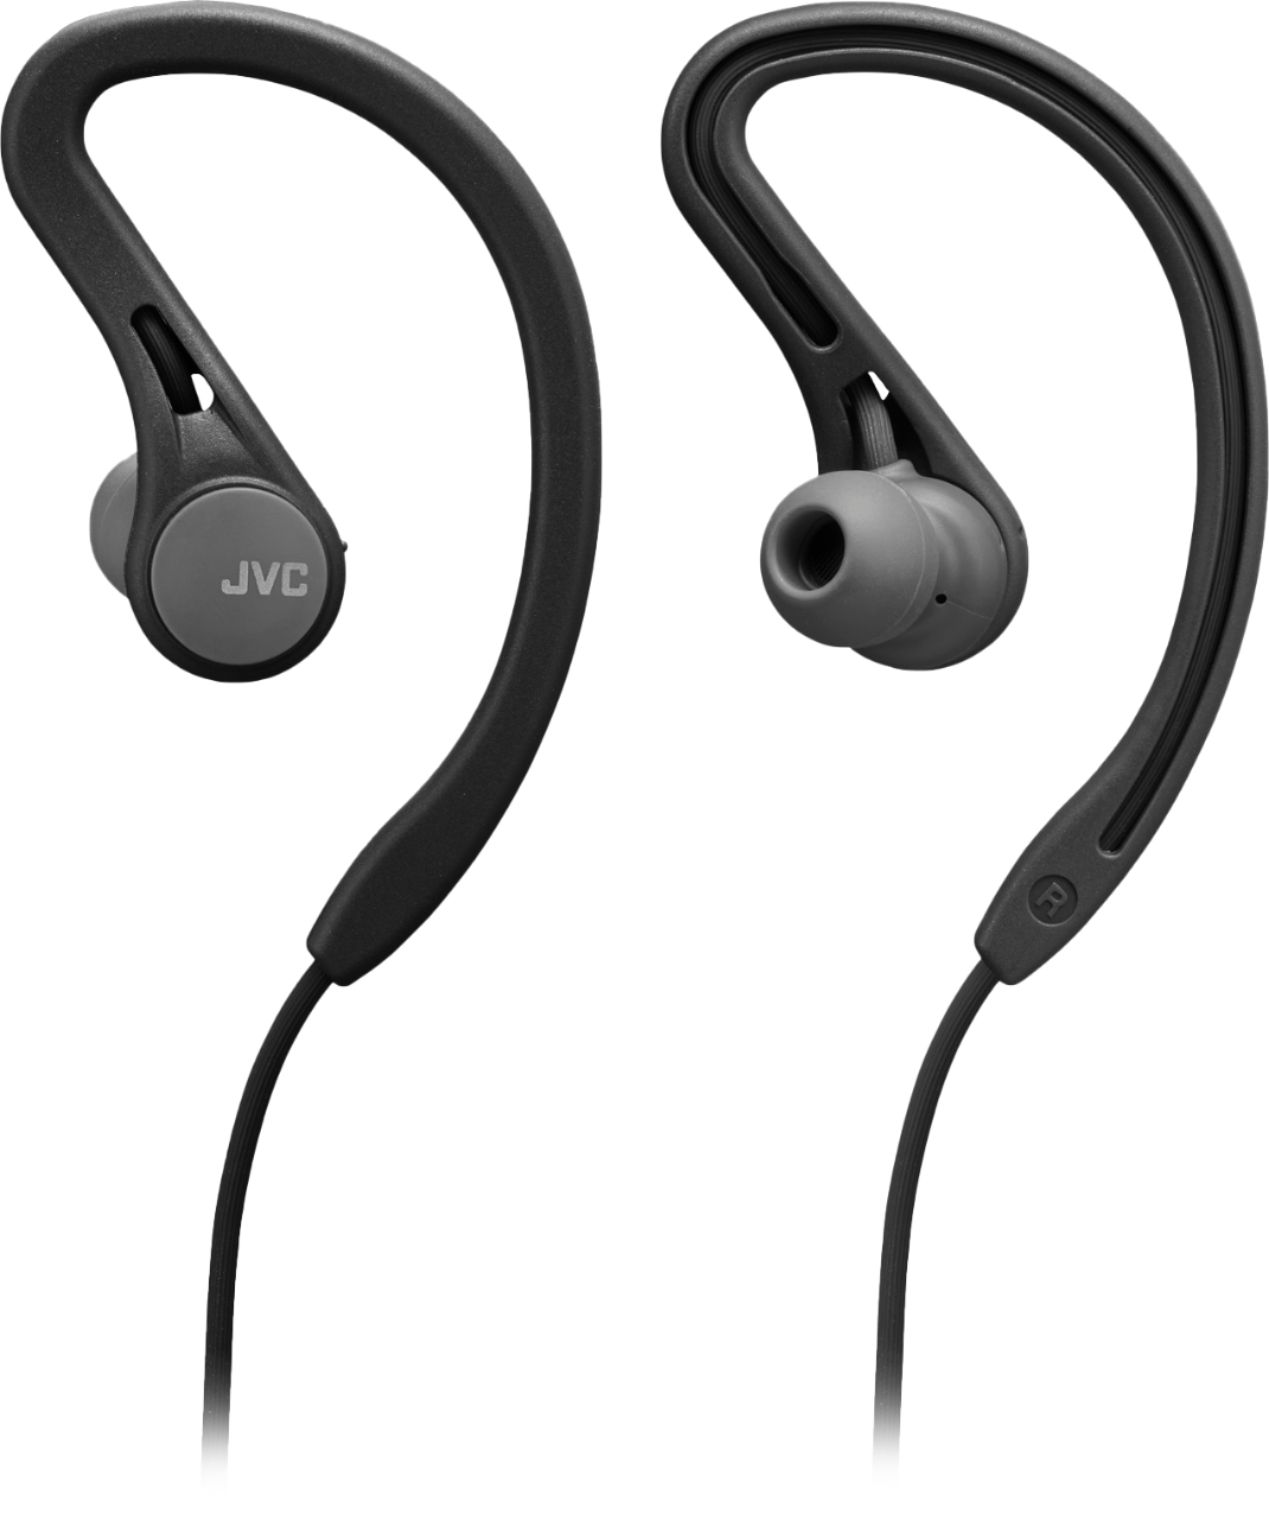 JVC Headphones - Apps on Google Play